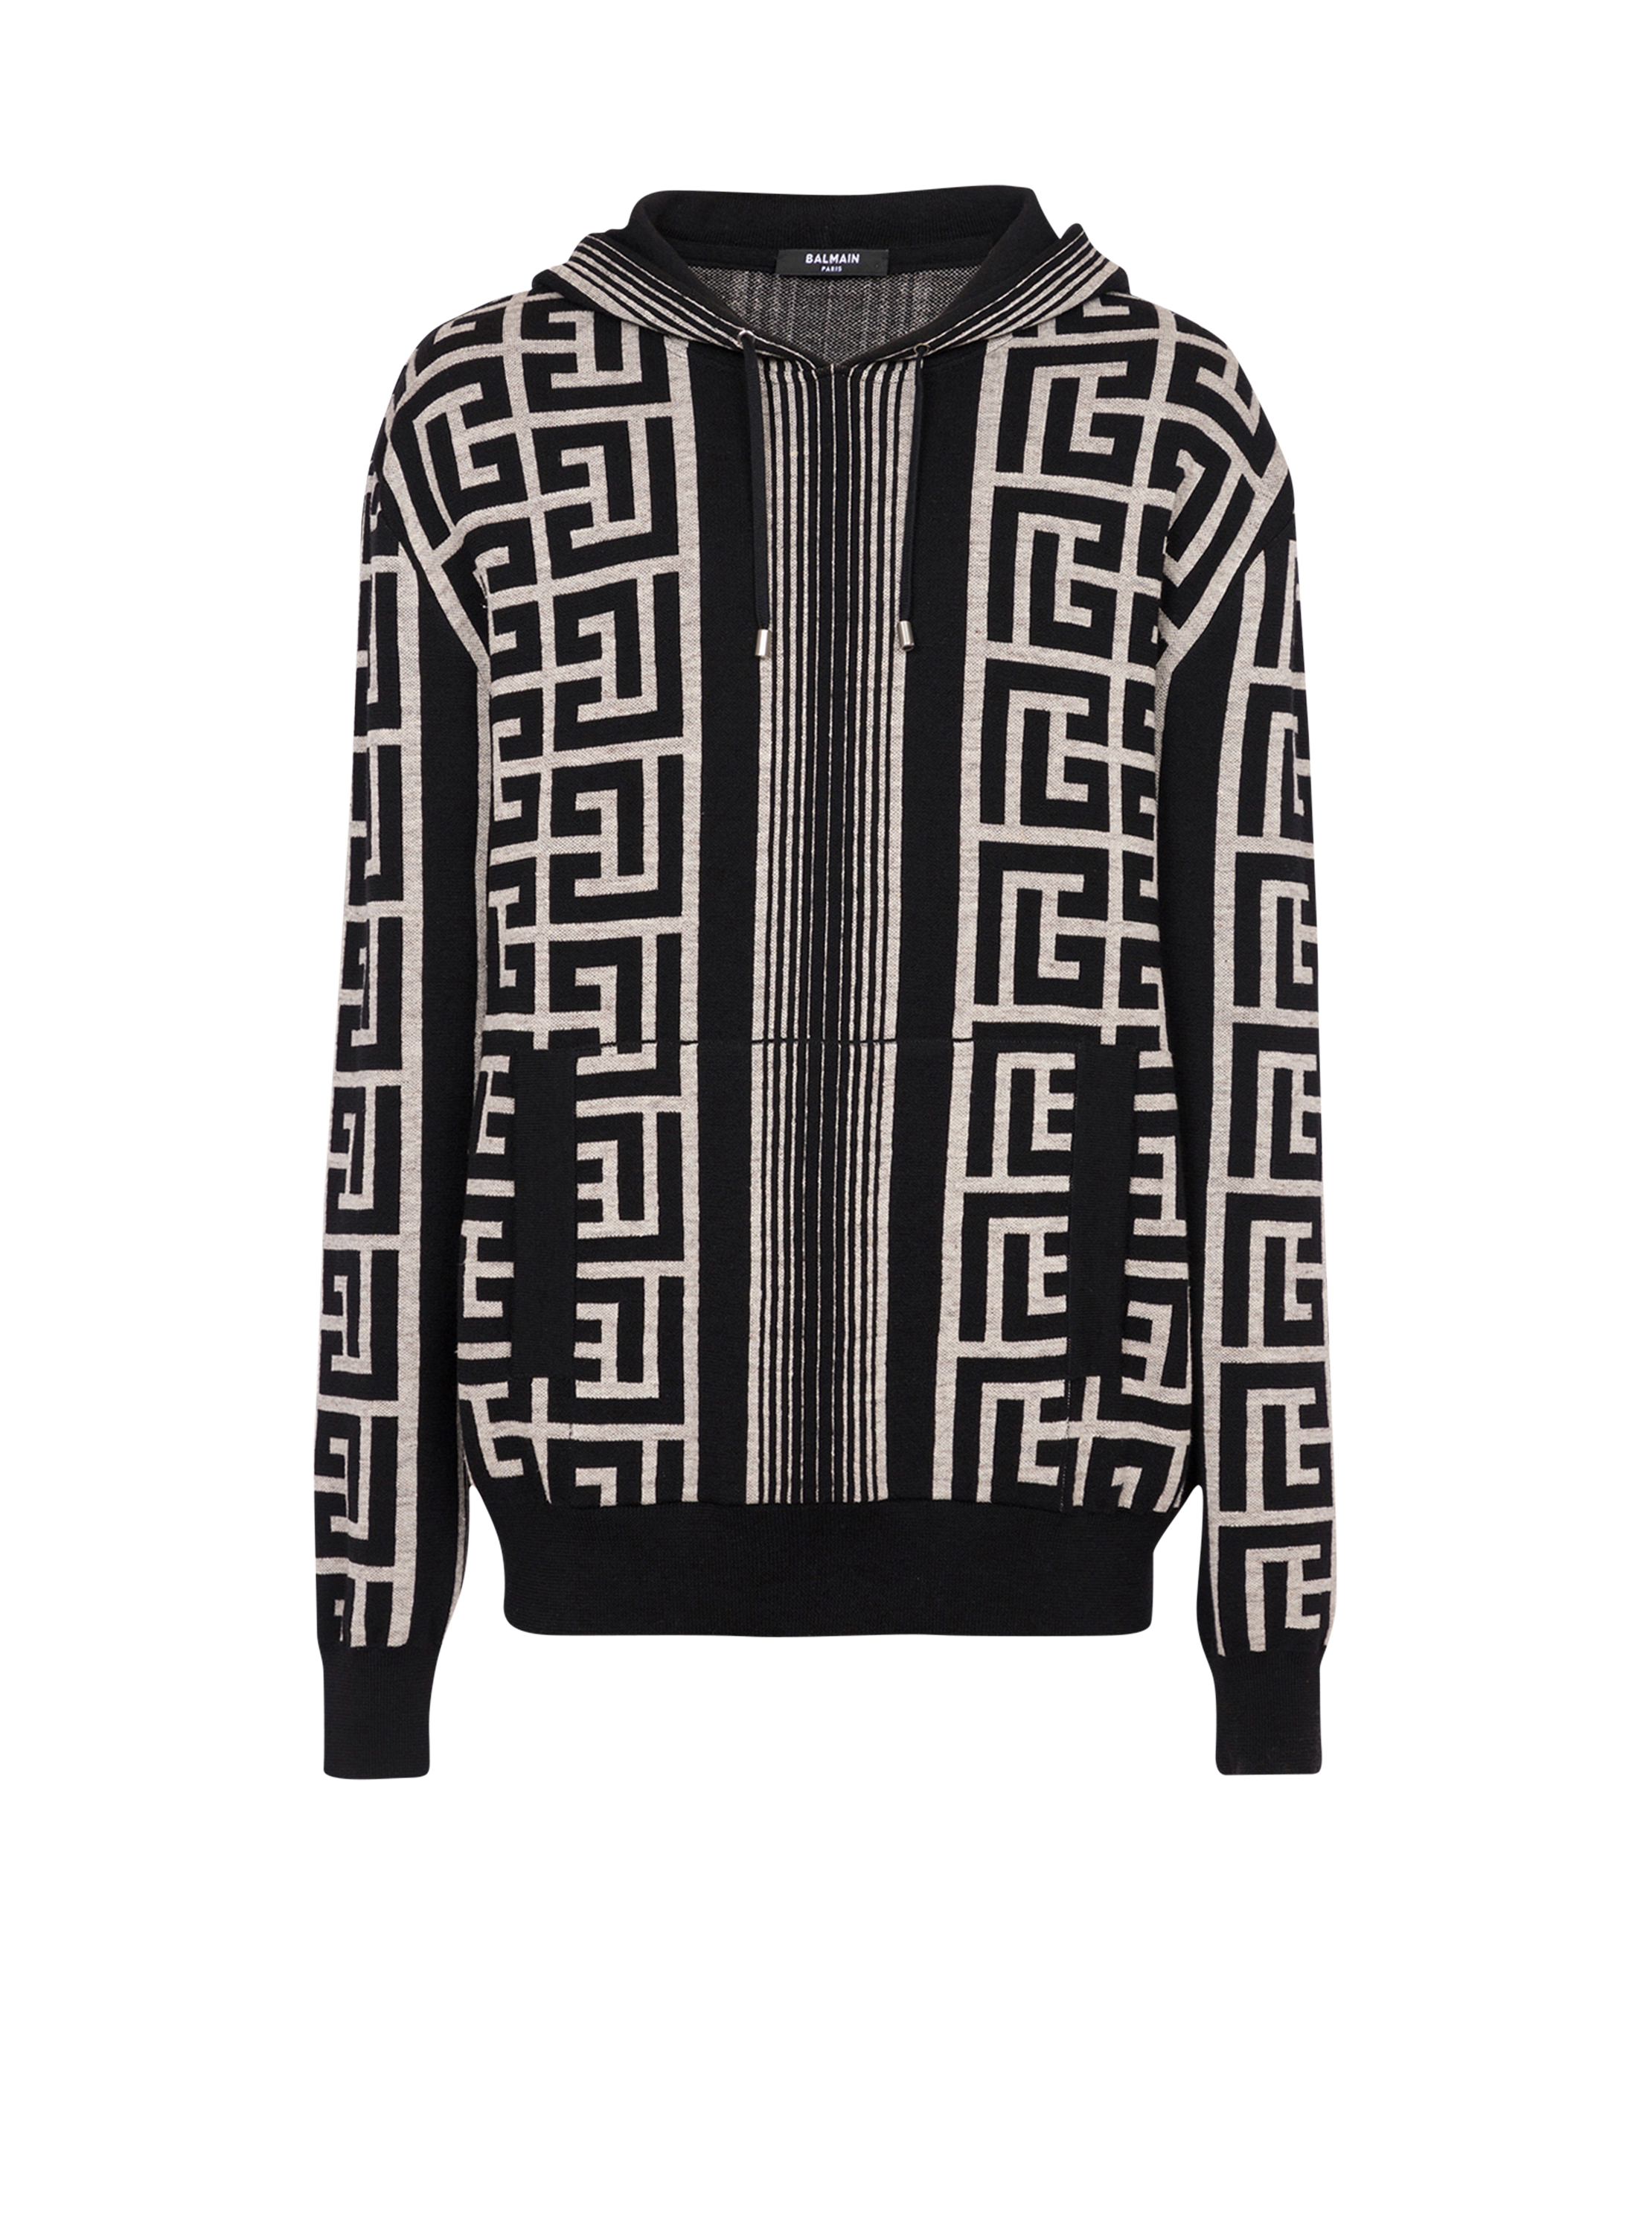 Wool sweater with maxi Balmain monogram, black, hi-res